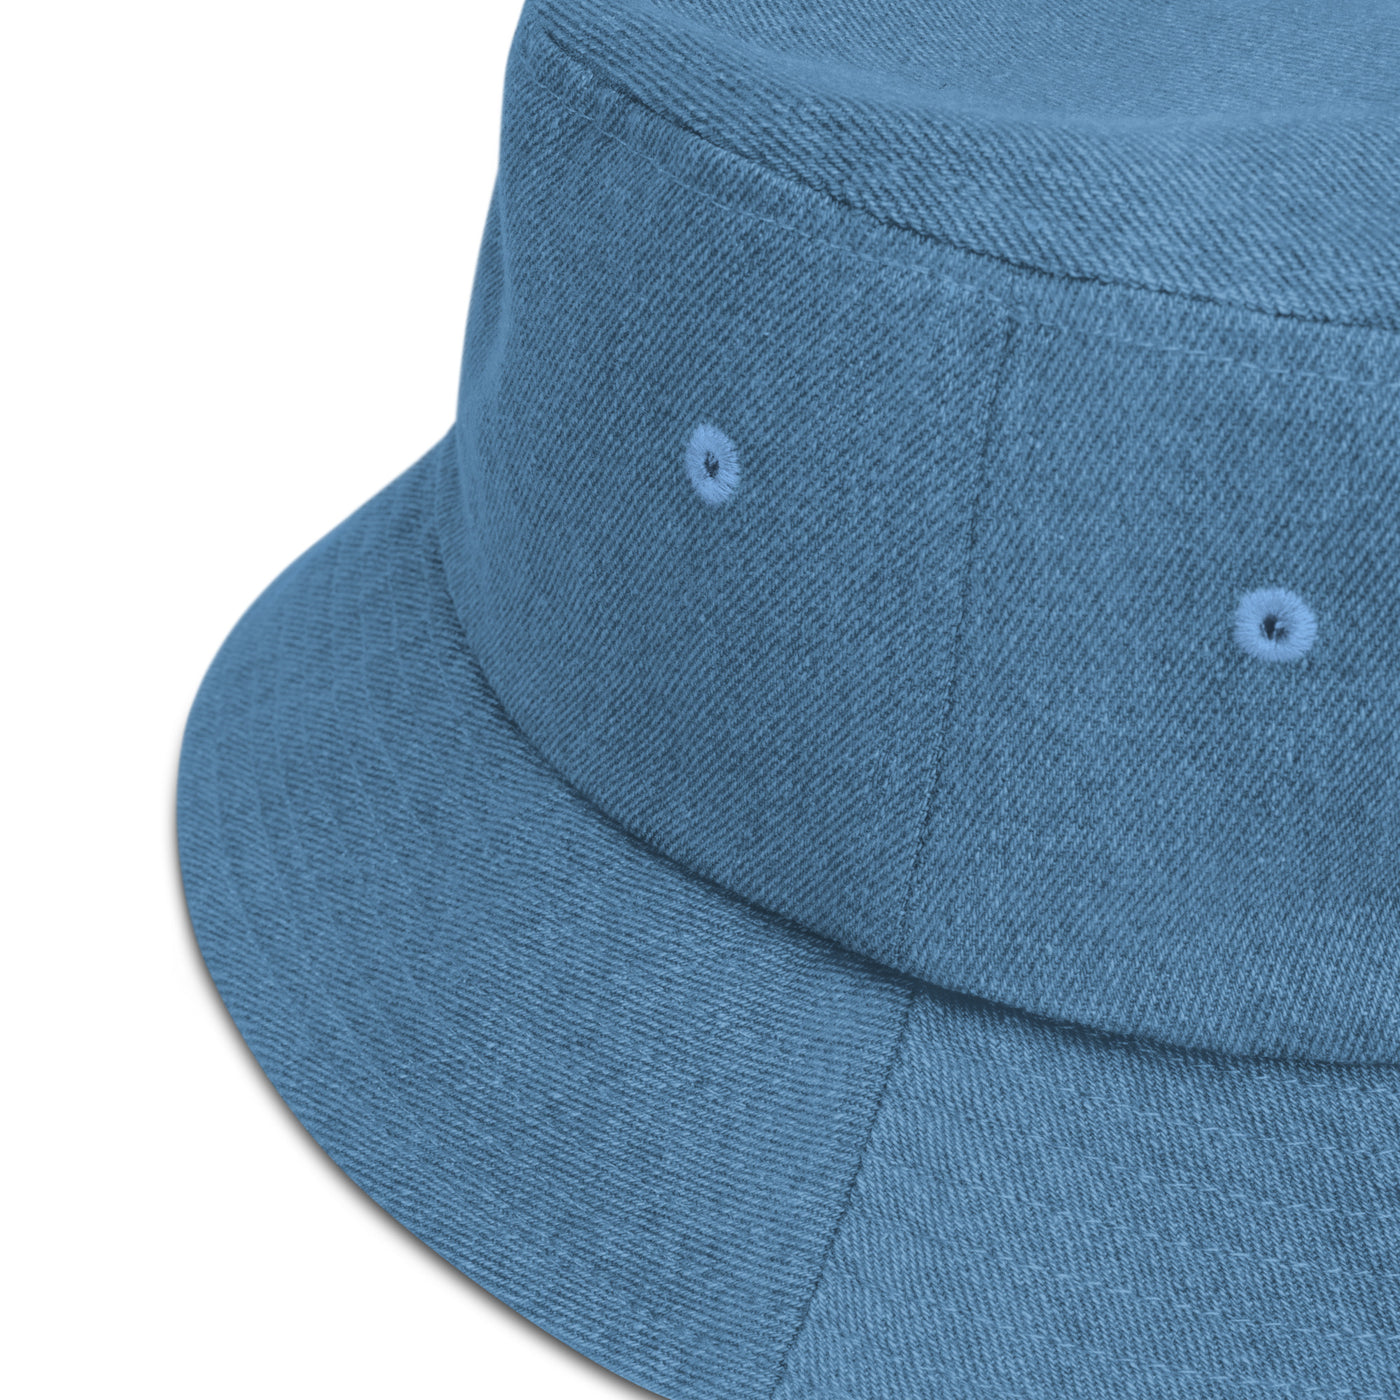 GOAT Bucket Hat (Light Denim)